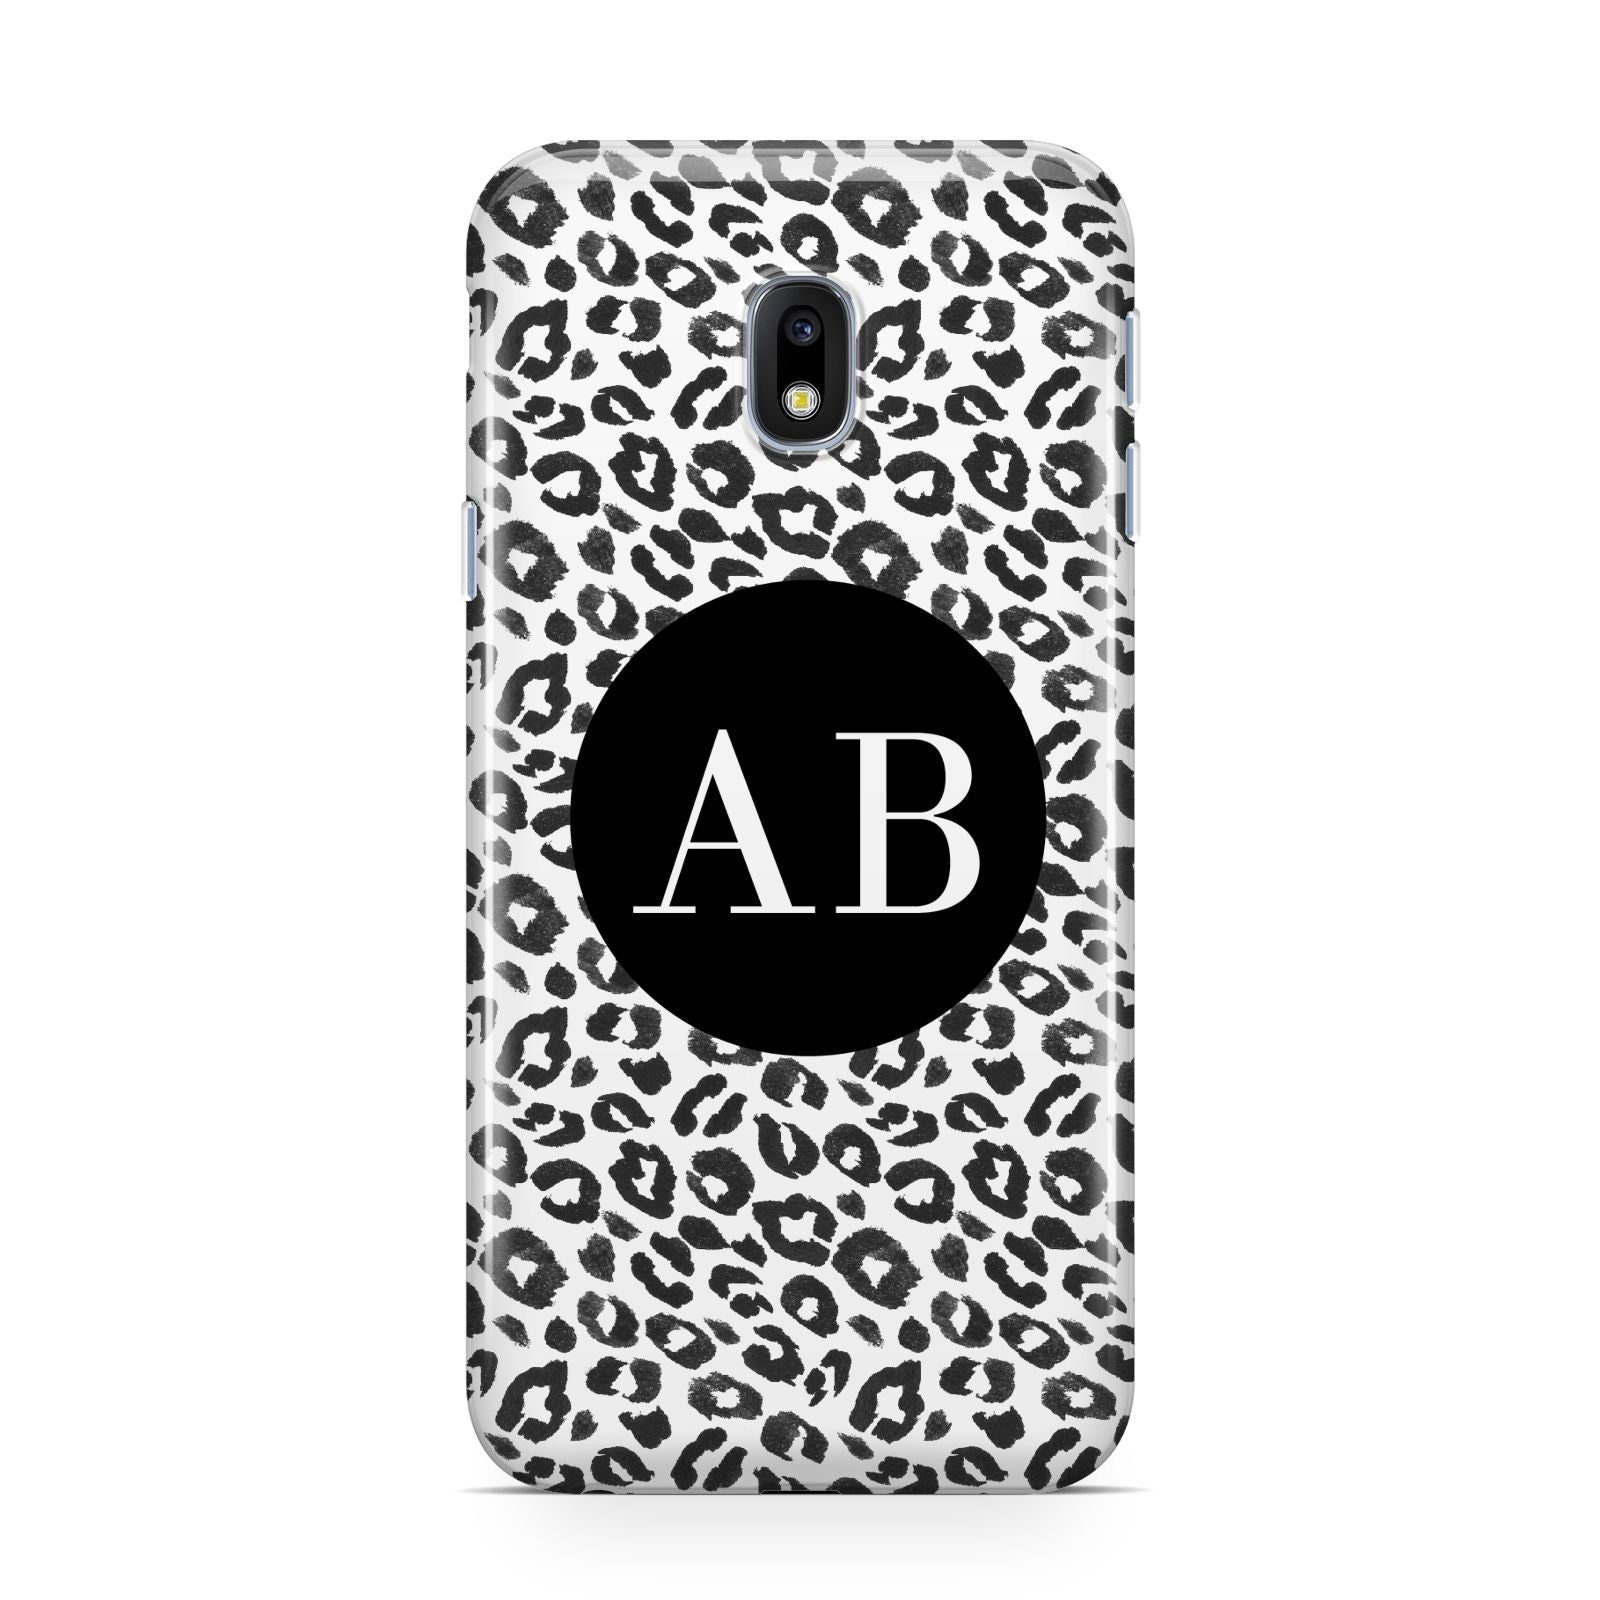 Leopard Print Black and White Samsung Galaxy J3 2017 Case